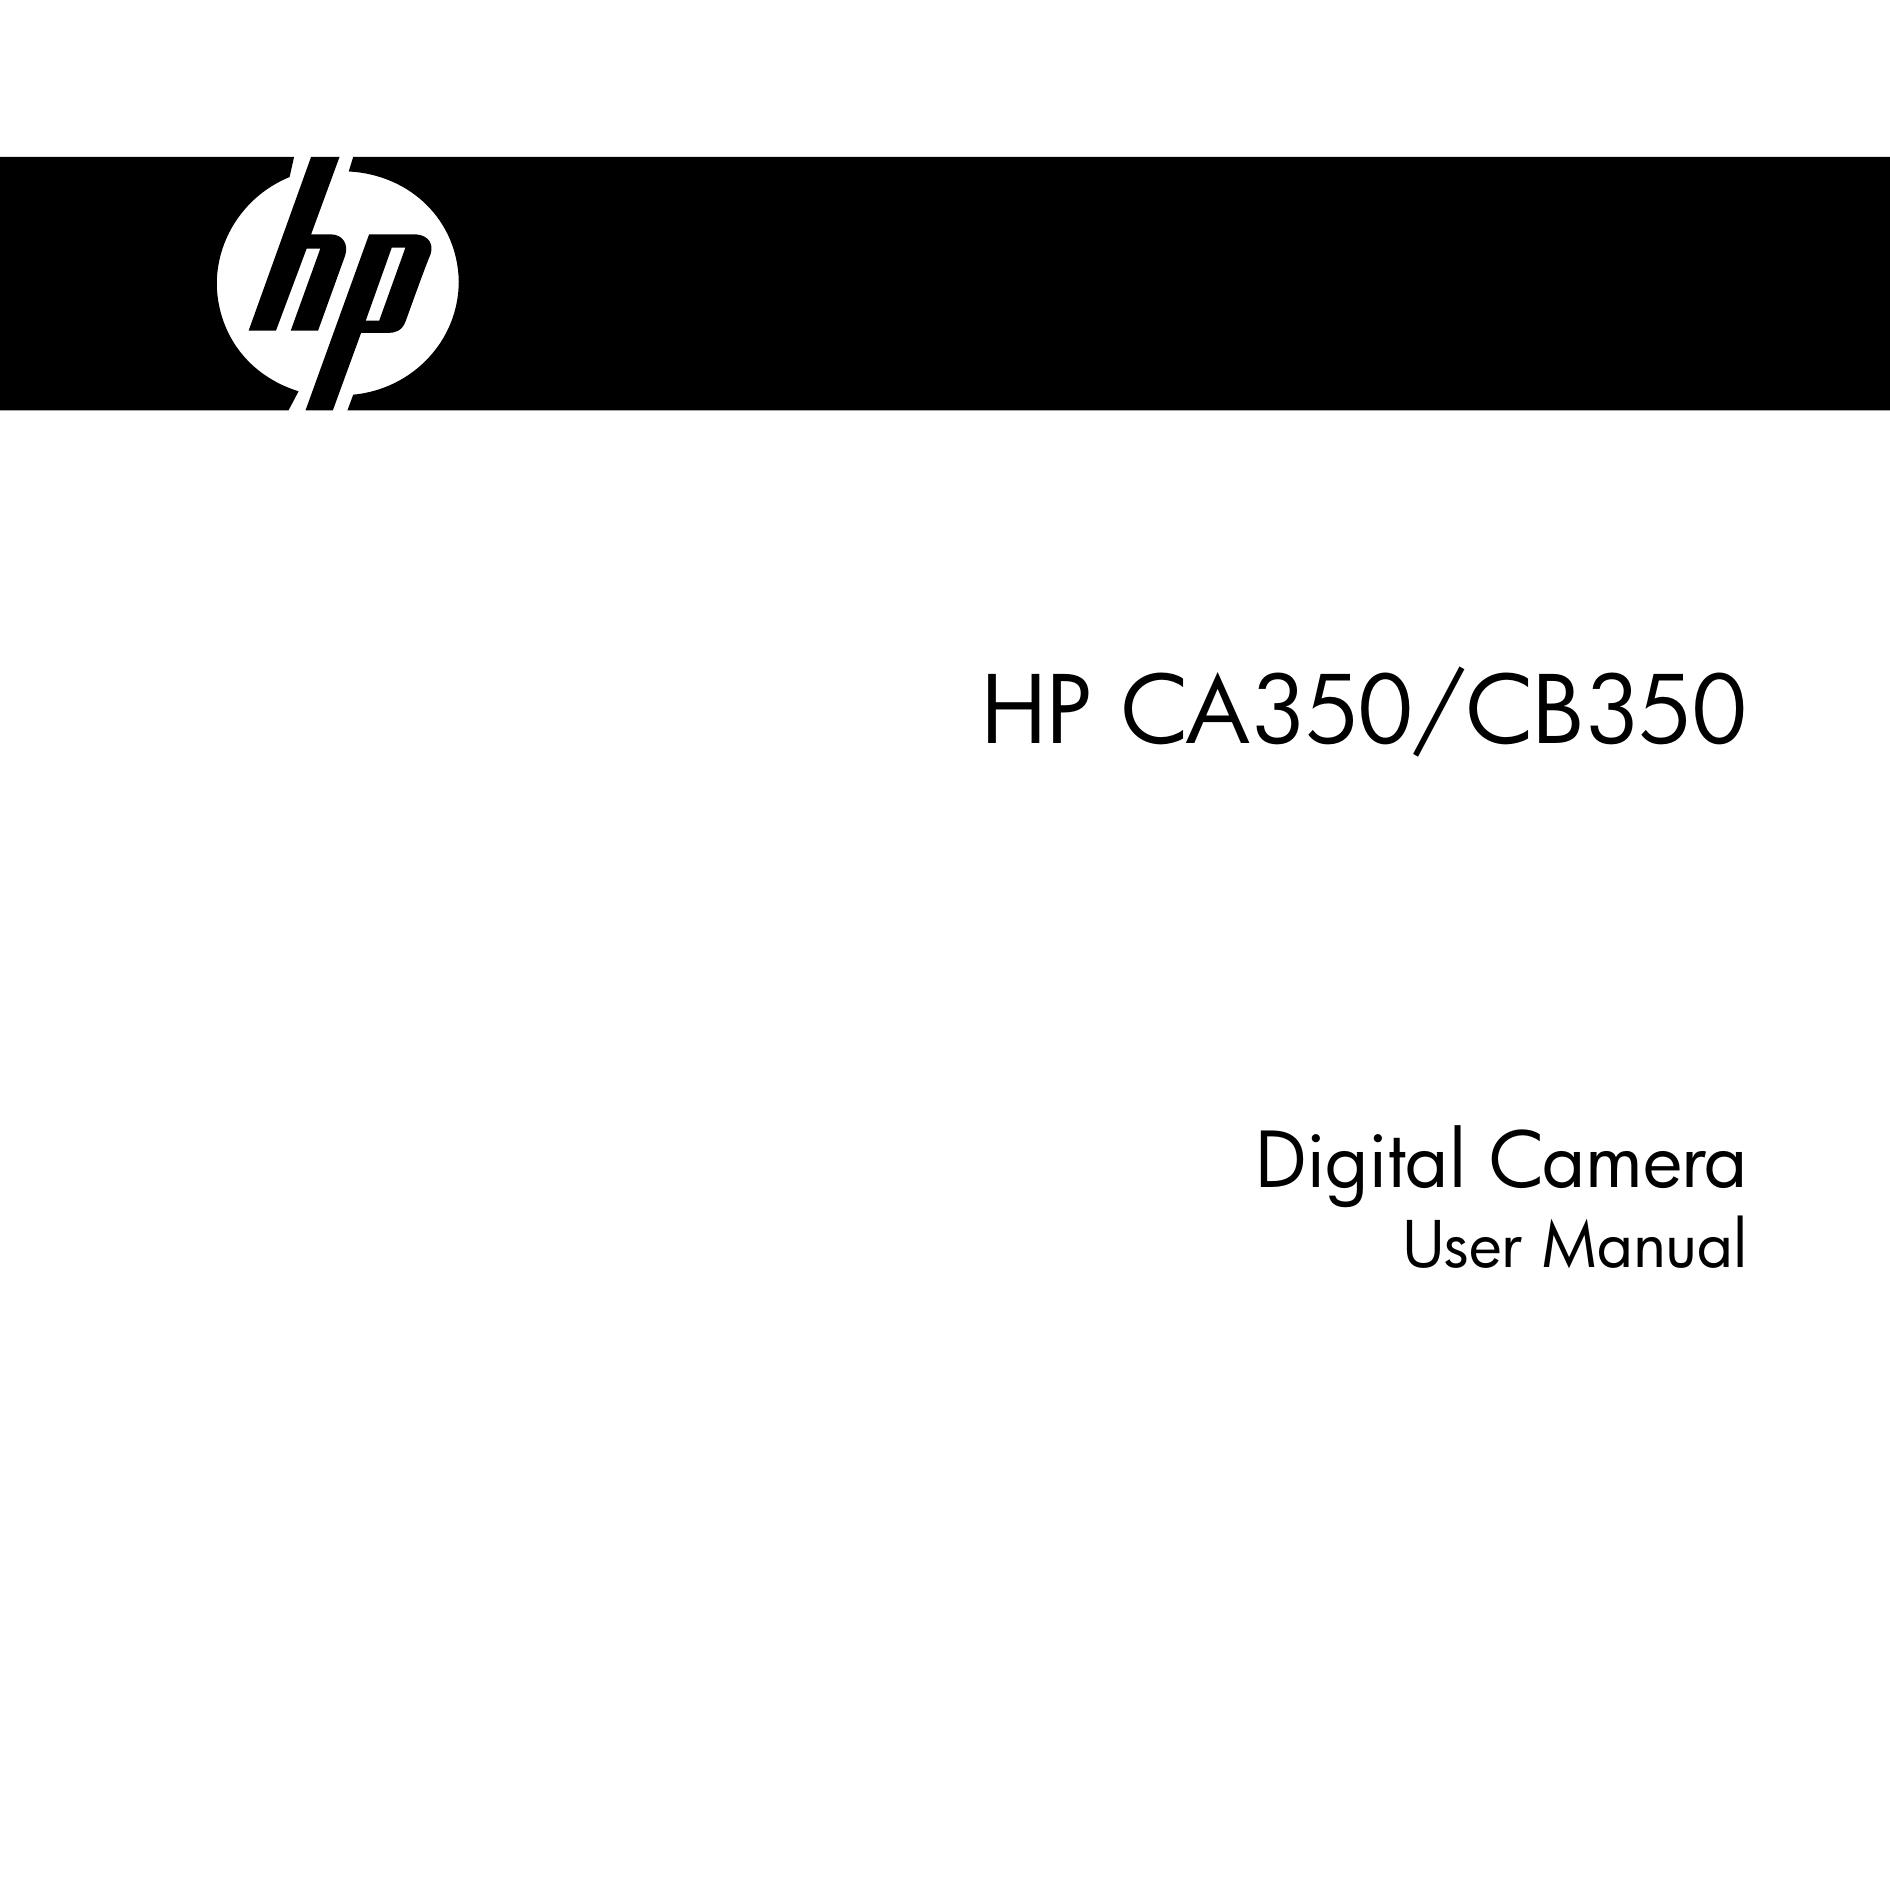 HP (Hewlett-Packard) CB350 Camcorder User Manual